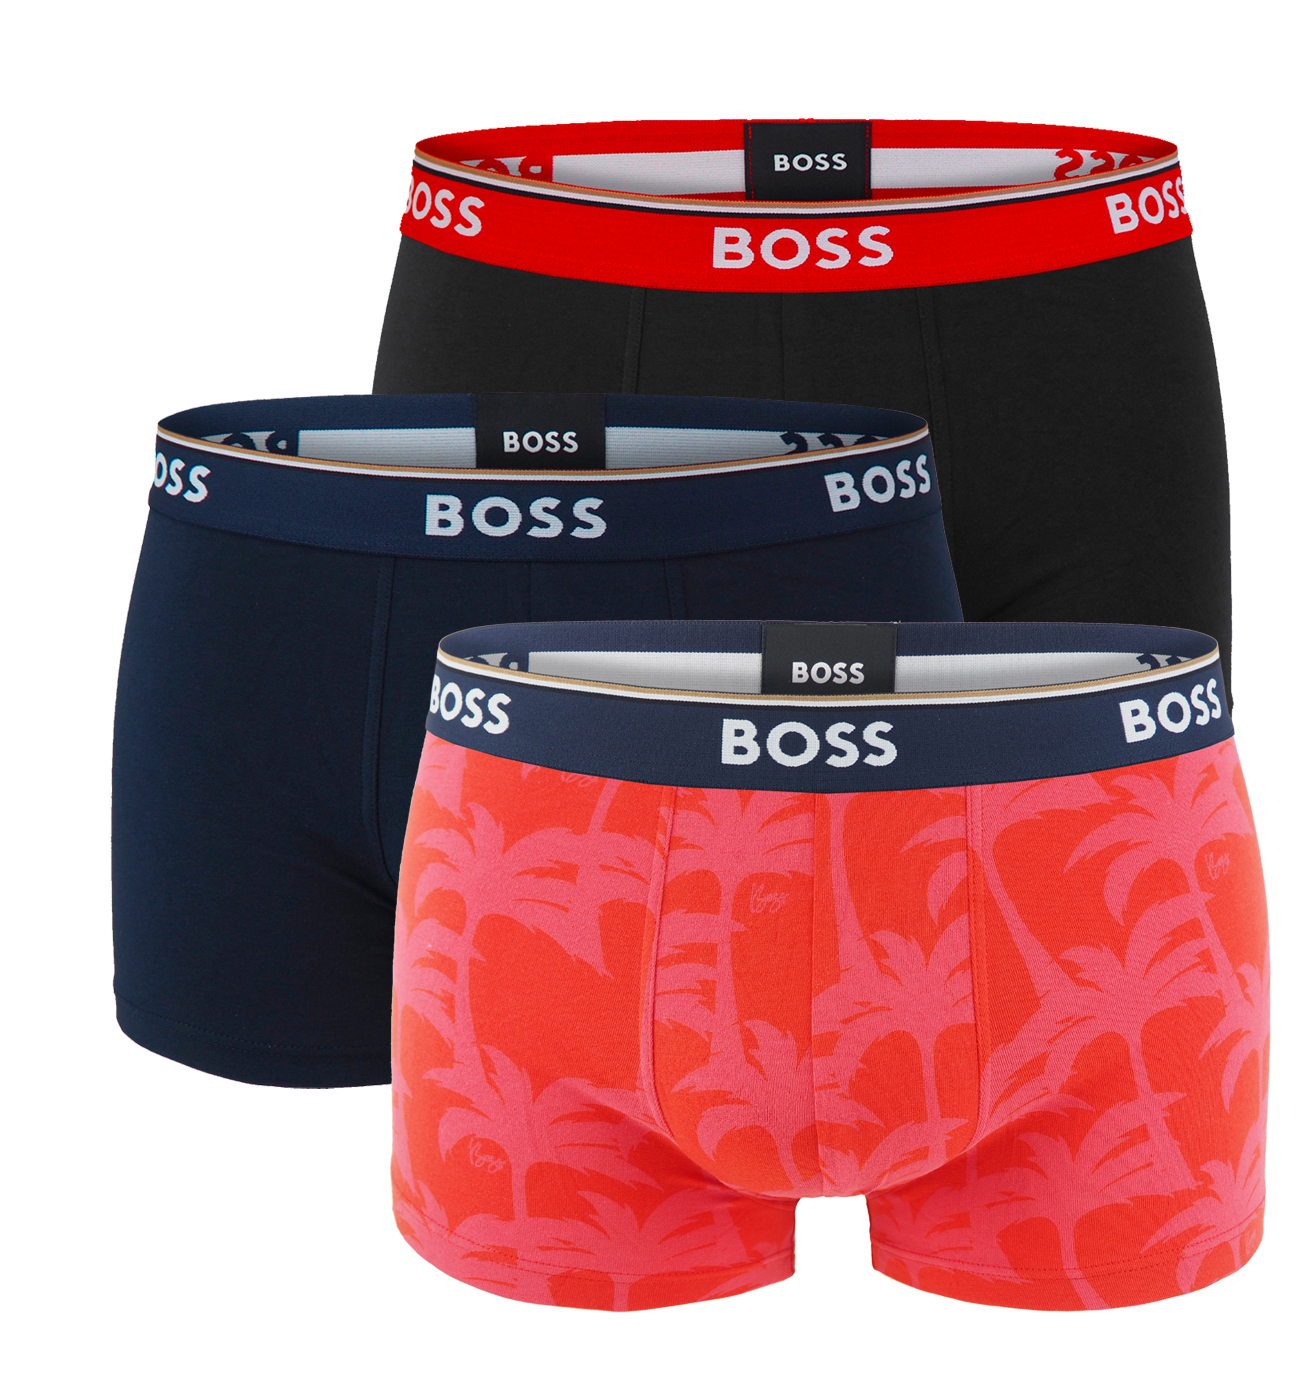 BOSS - boxerky 3PACK cotton stretch power design palm & dark color combo - limitovaná fashion edícia (HUGO BOSS)